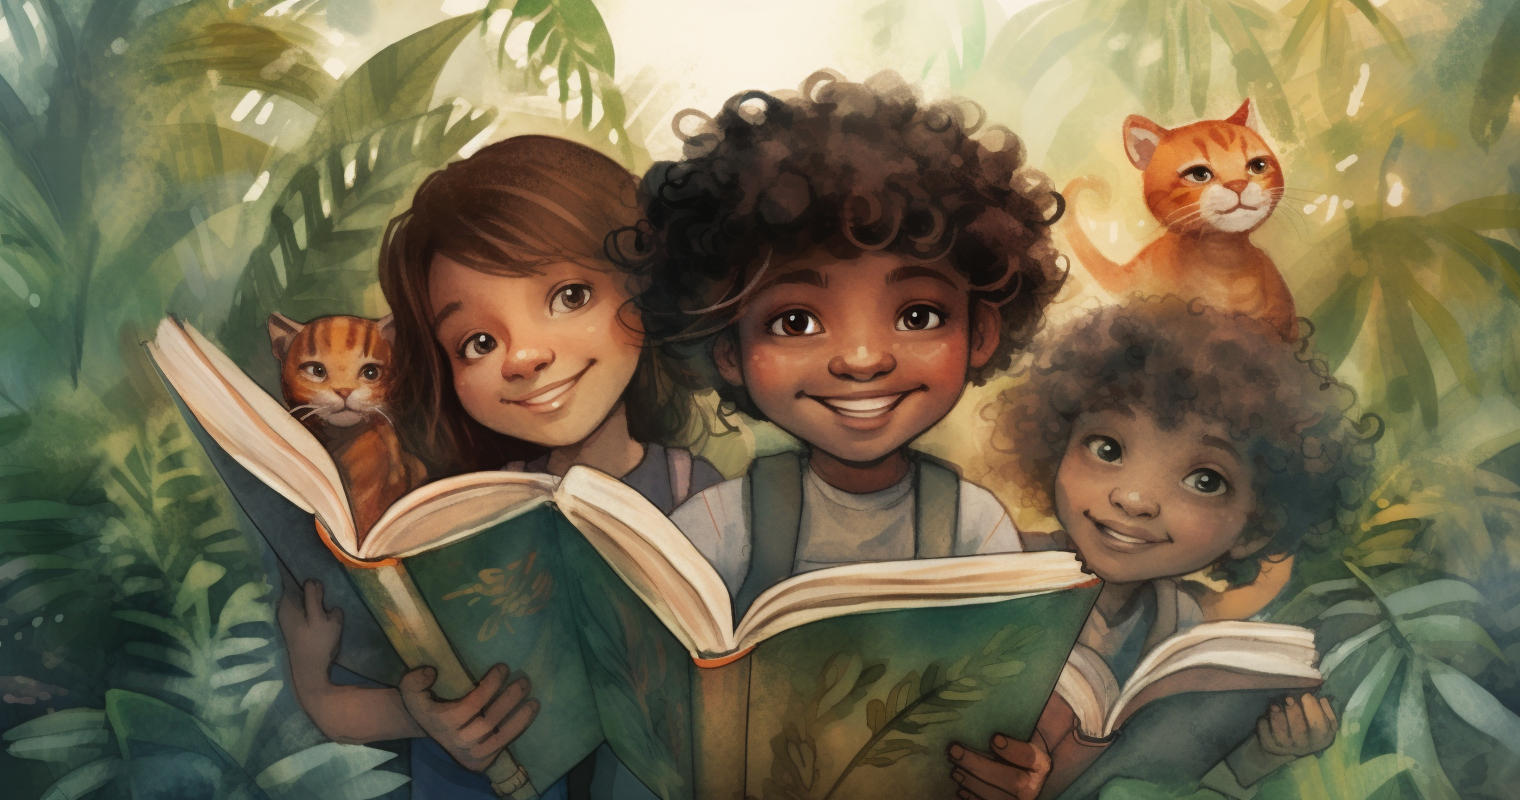 cuentos populares infantiles: "¡Magia y Aventuras Inesperadas!"